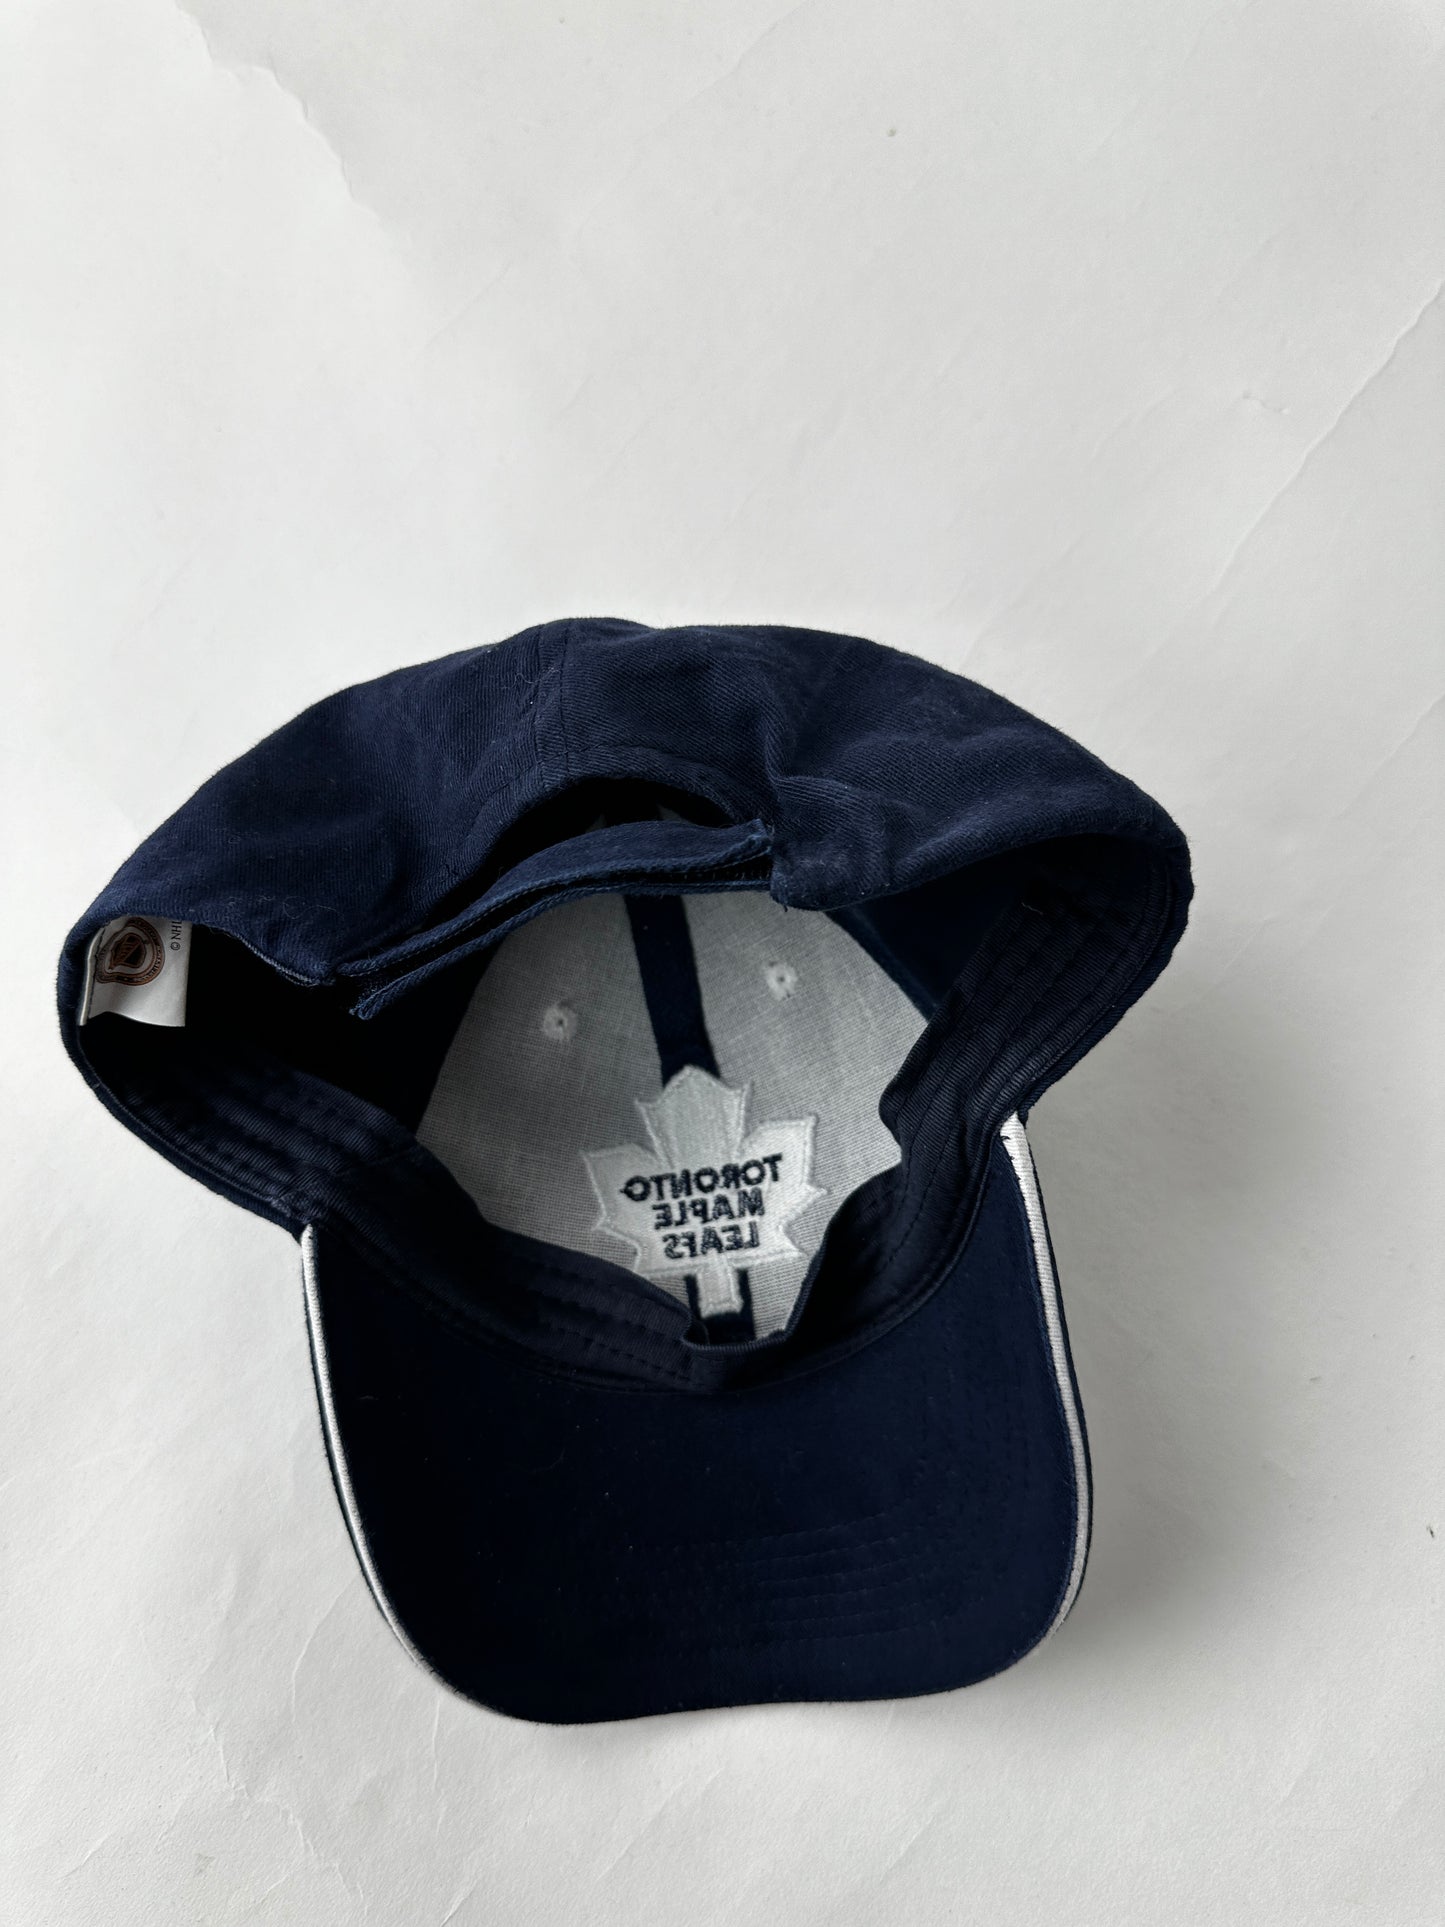 Vintage Toronto Maple Leafs Hat Cap Adult Blue Strap Back NHL